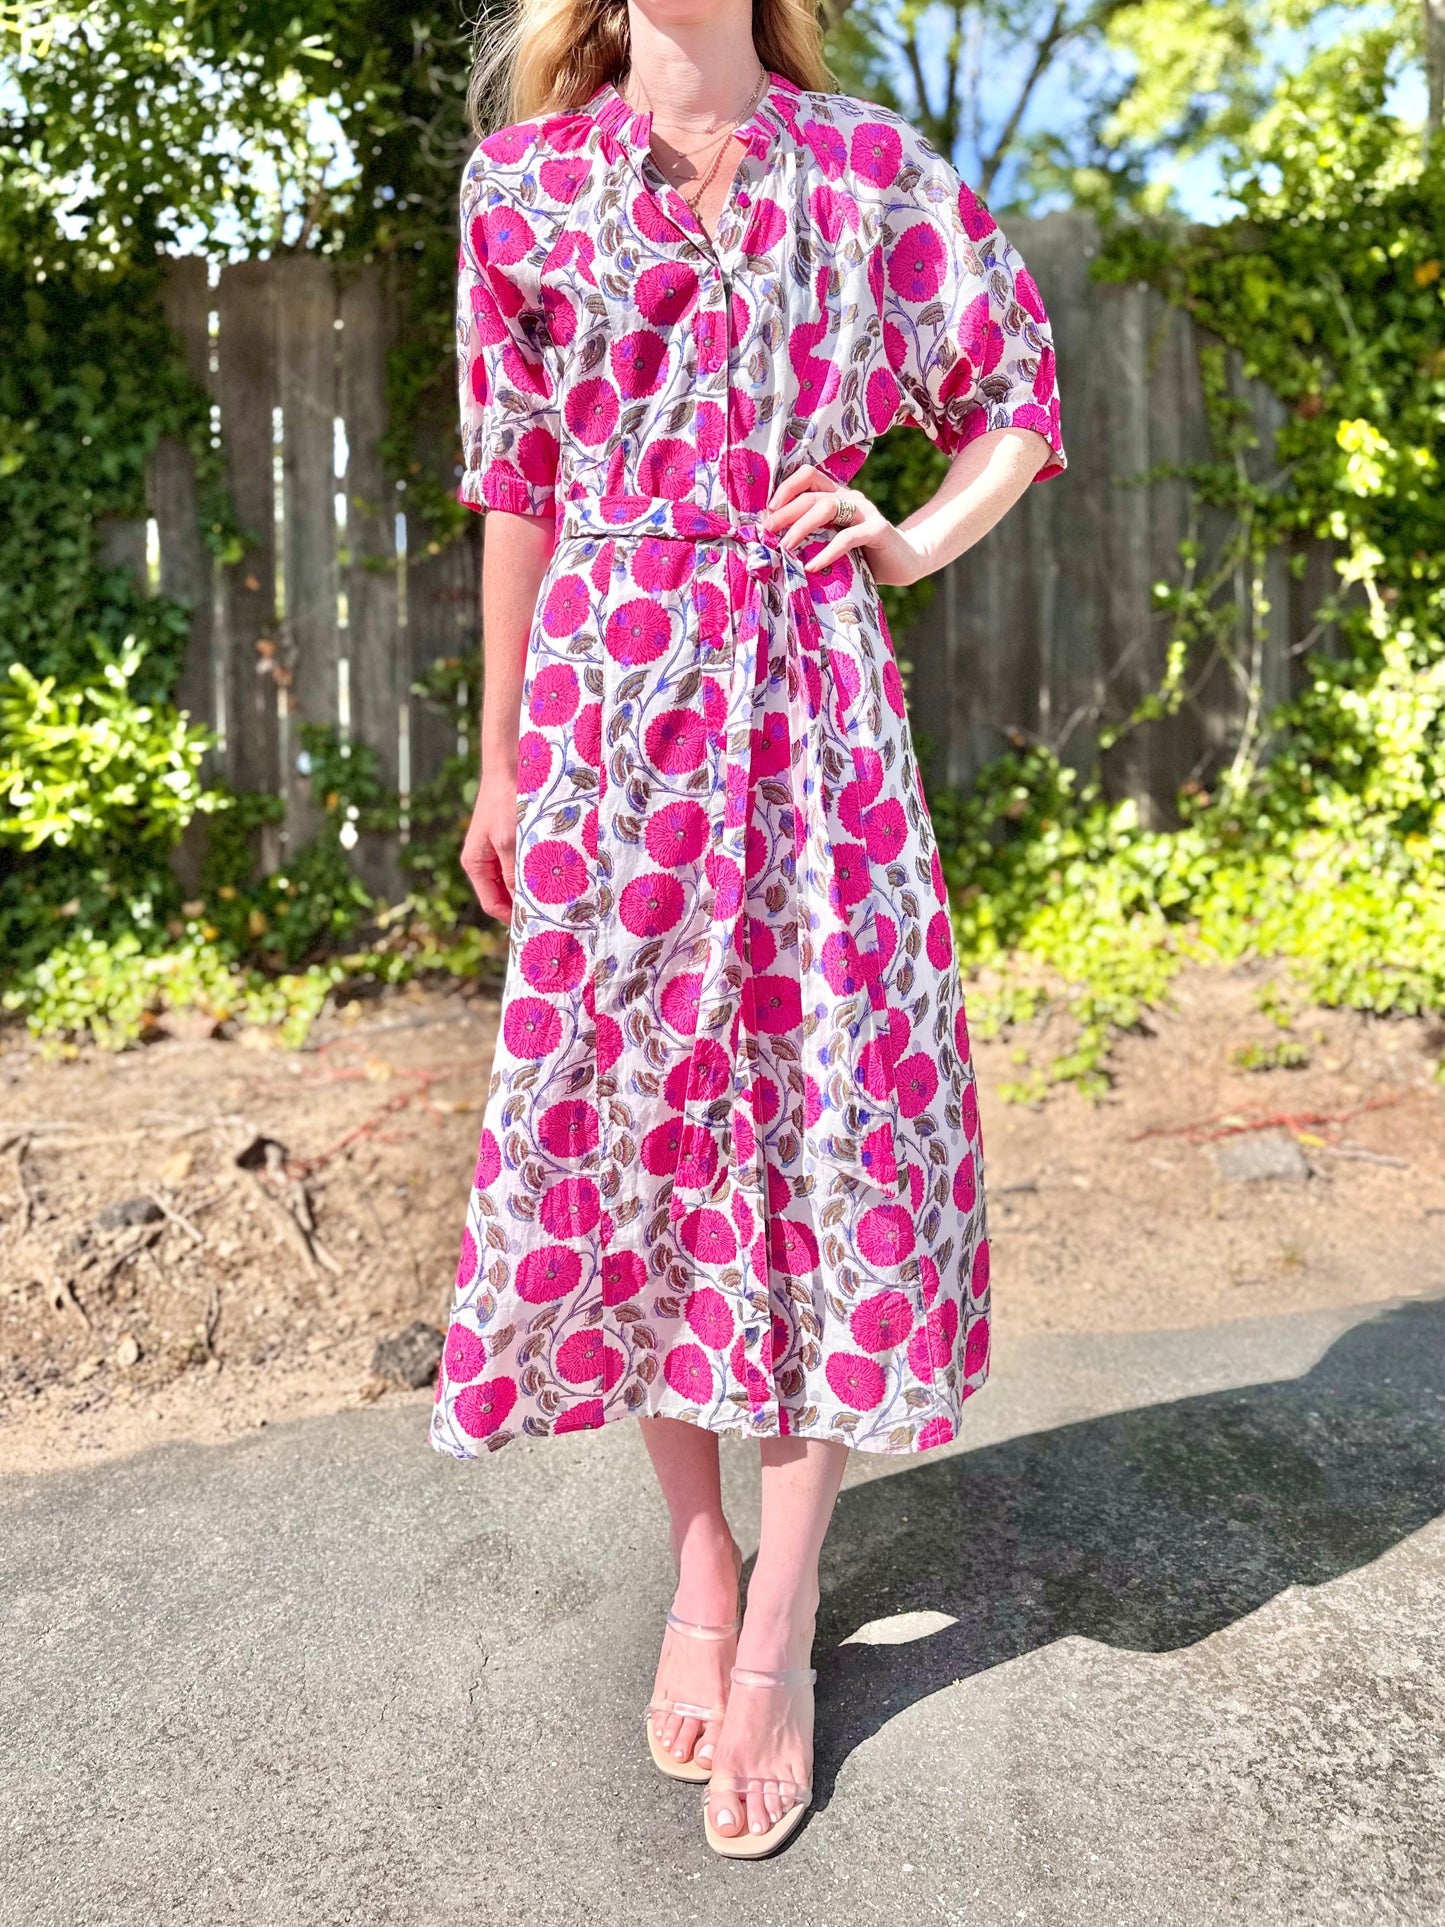 Apollo Maxi Dress in poppy pink by Lola Australia